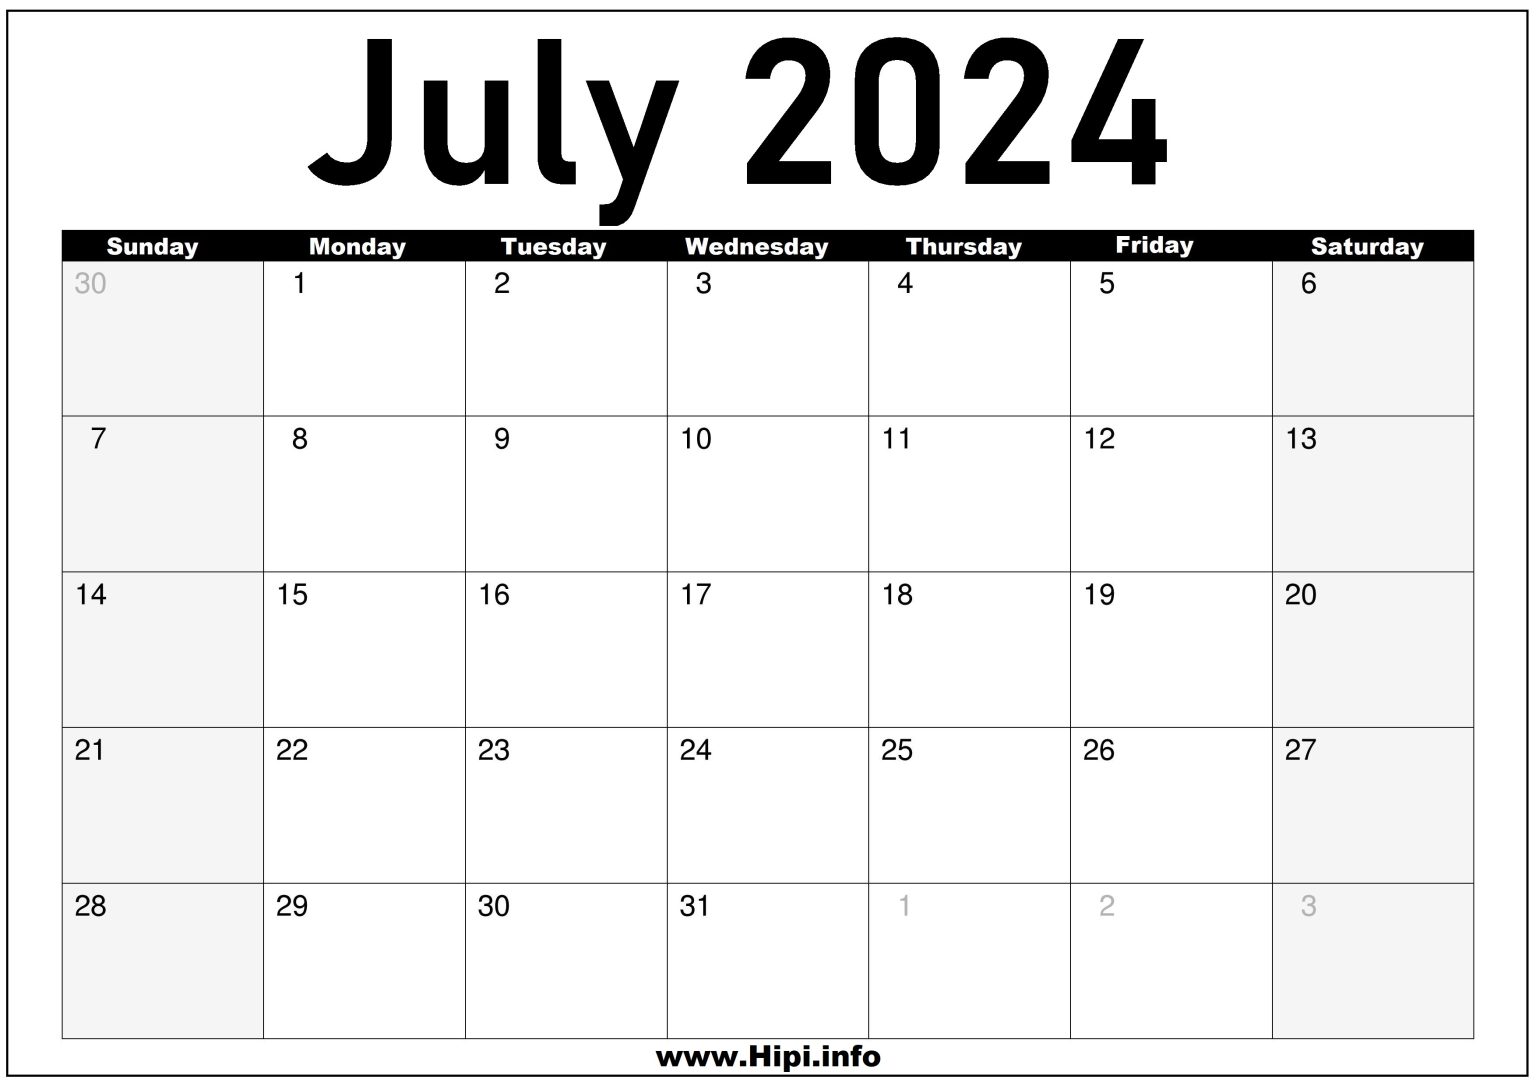 july-2024-calendar-monthly-hipi-info